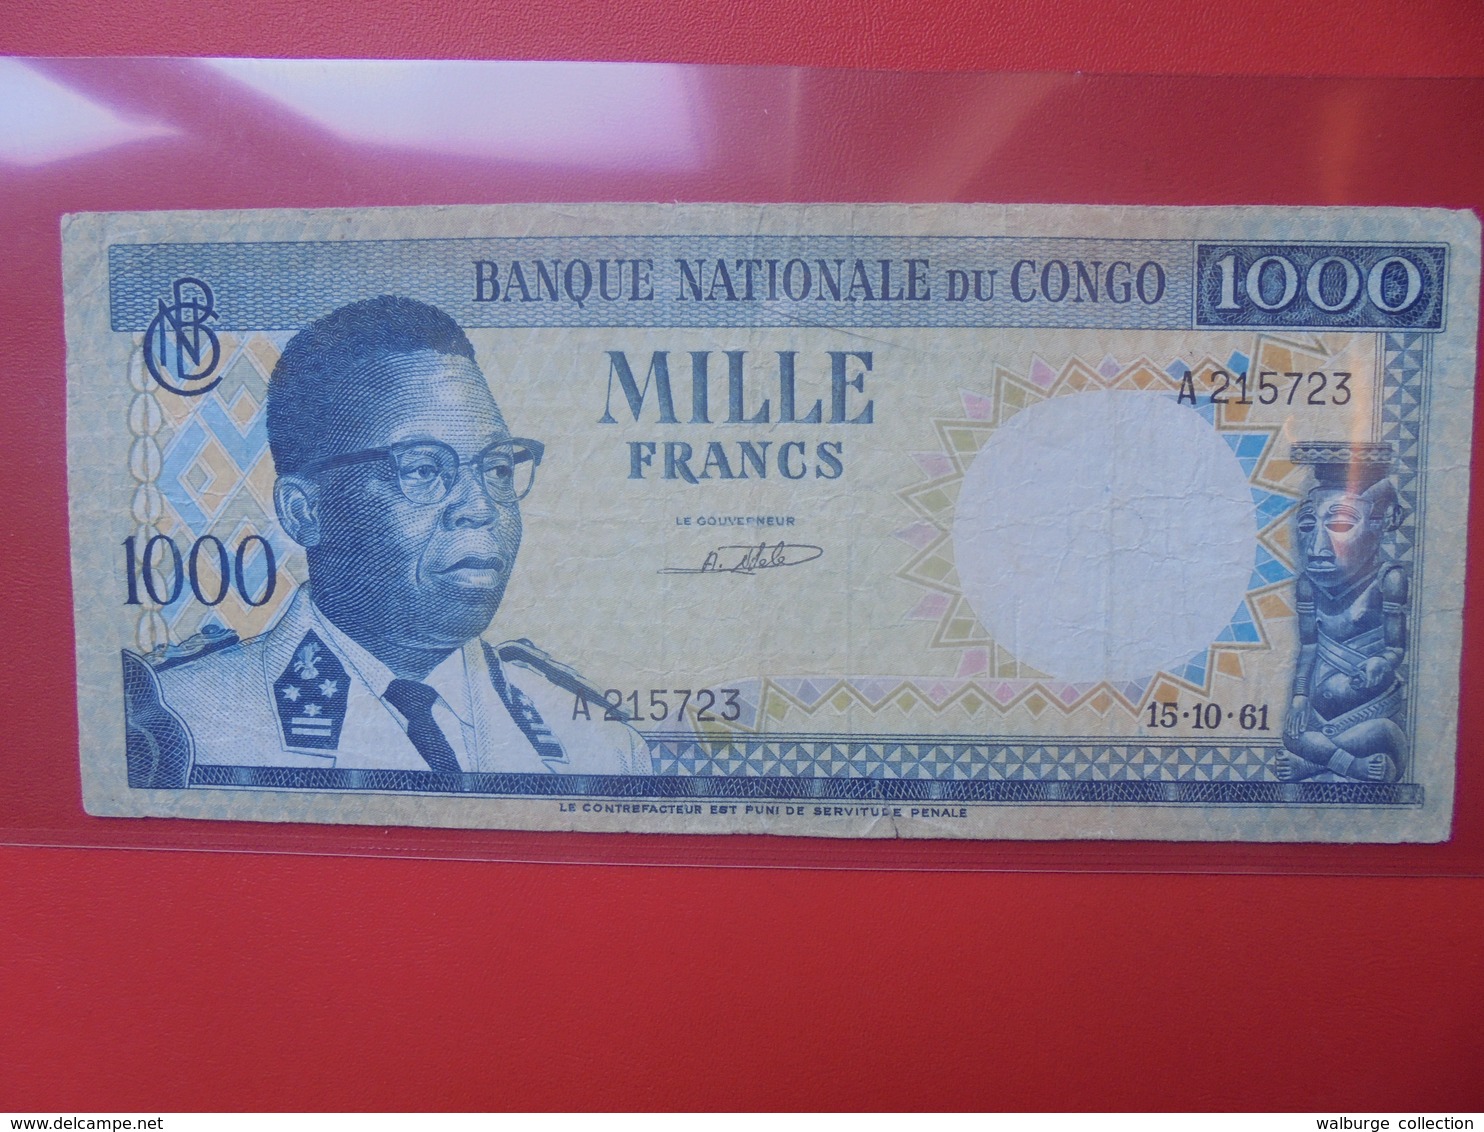 CONGO 1000 FRANCS 15-10-1961 CIRCULER - Democratic Republic Of The Congo & Zaire